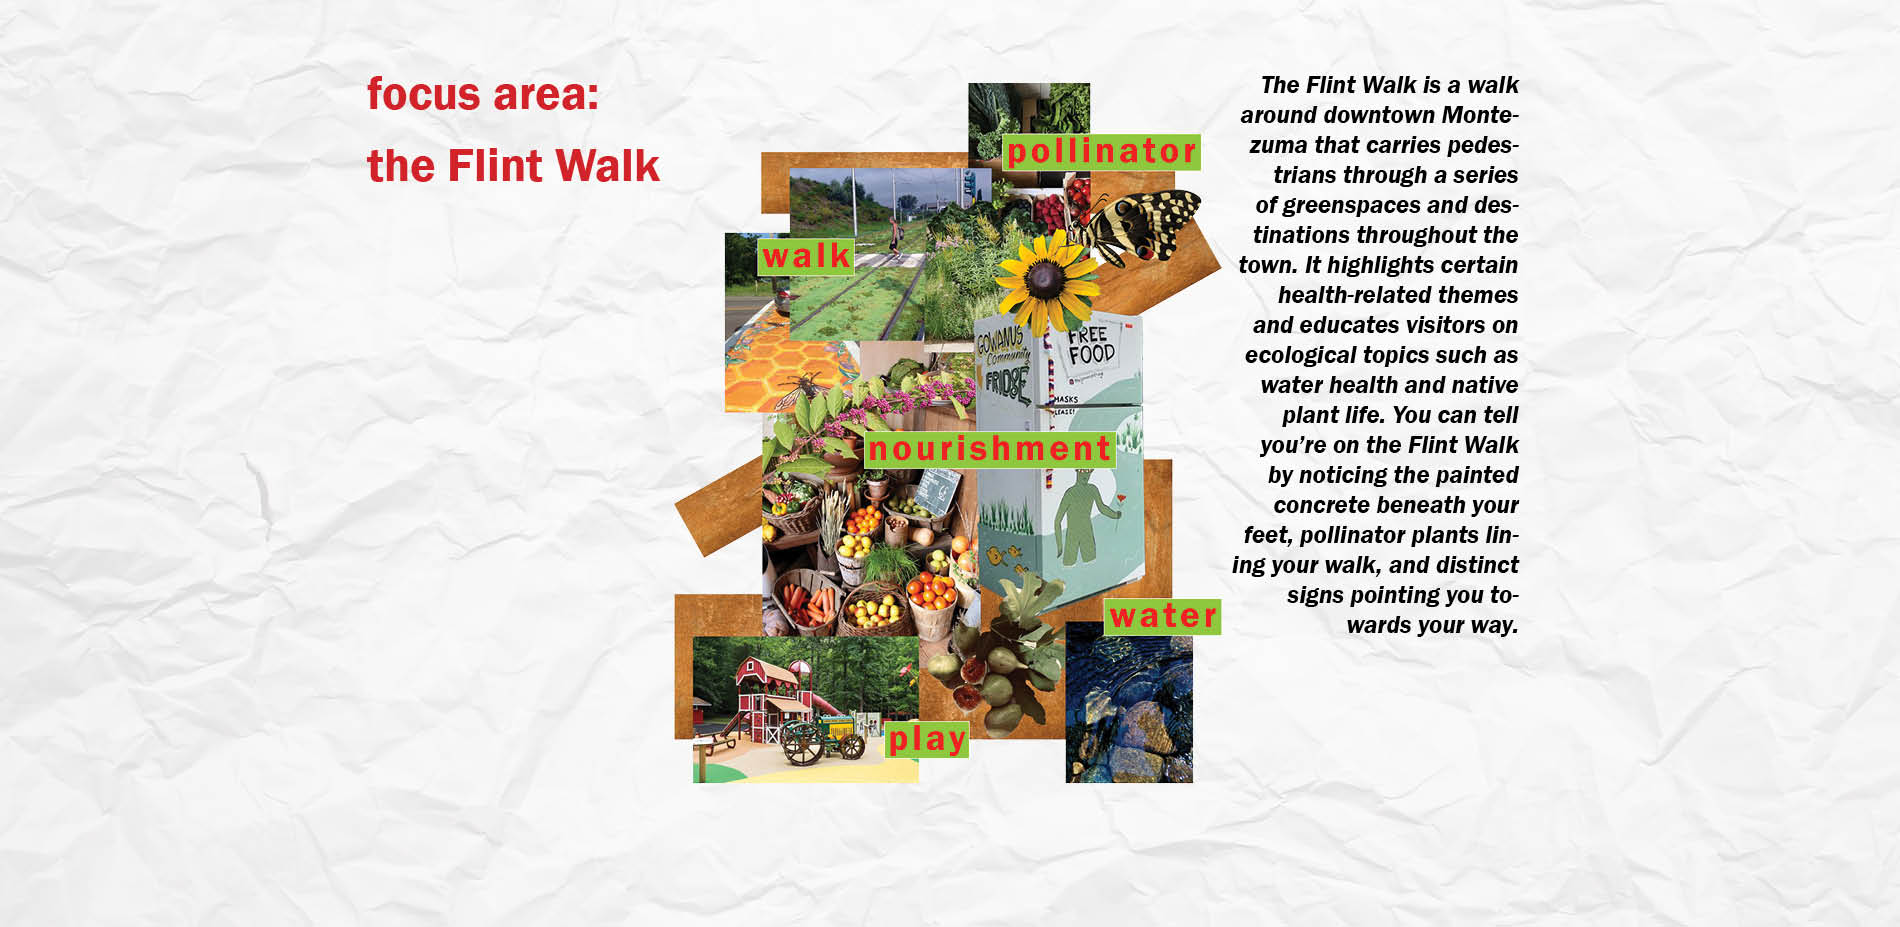 The Flint Walk: Ideation